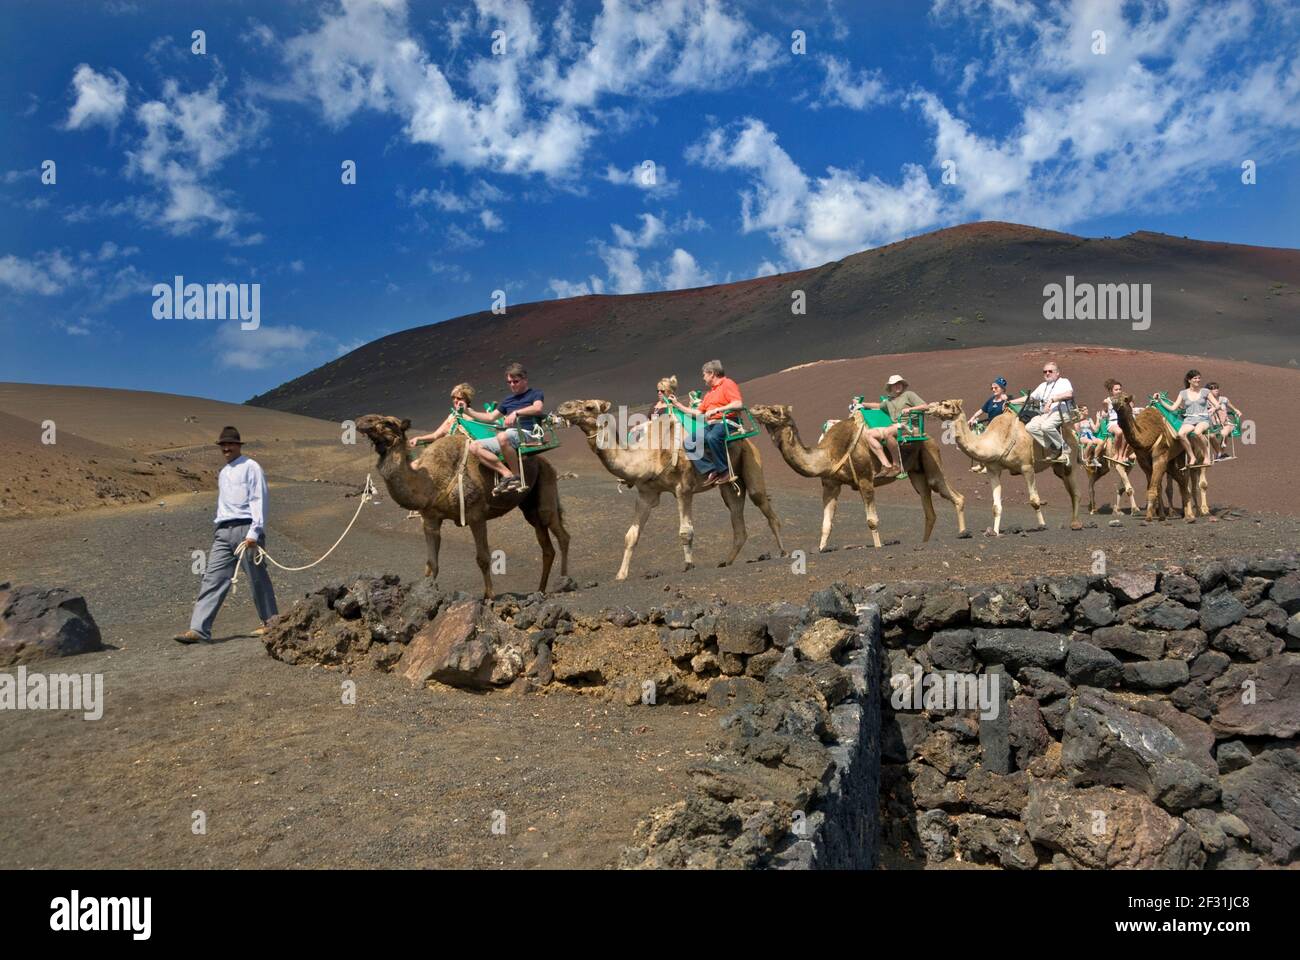 TIMANFAYA LANZAROTE Camel train trek trekking with tourists in Timanfaya National Park Lanzarote Canary Islands Spain Stock Photo